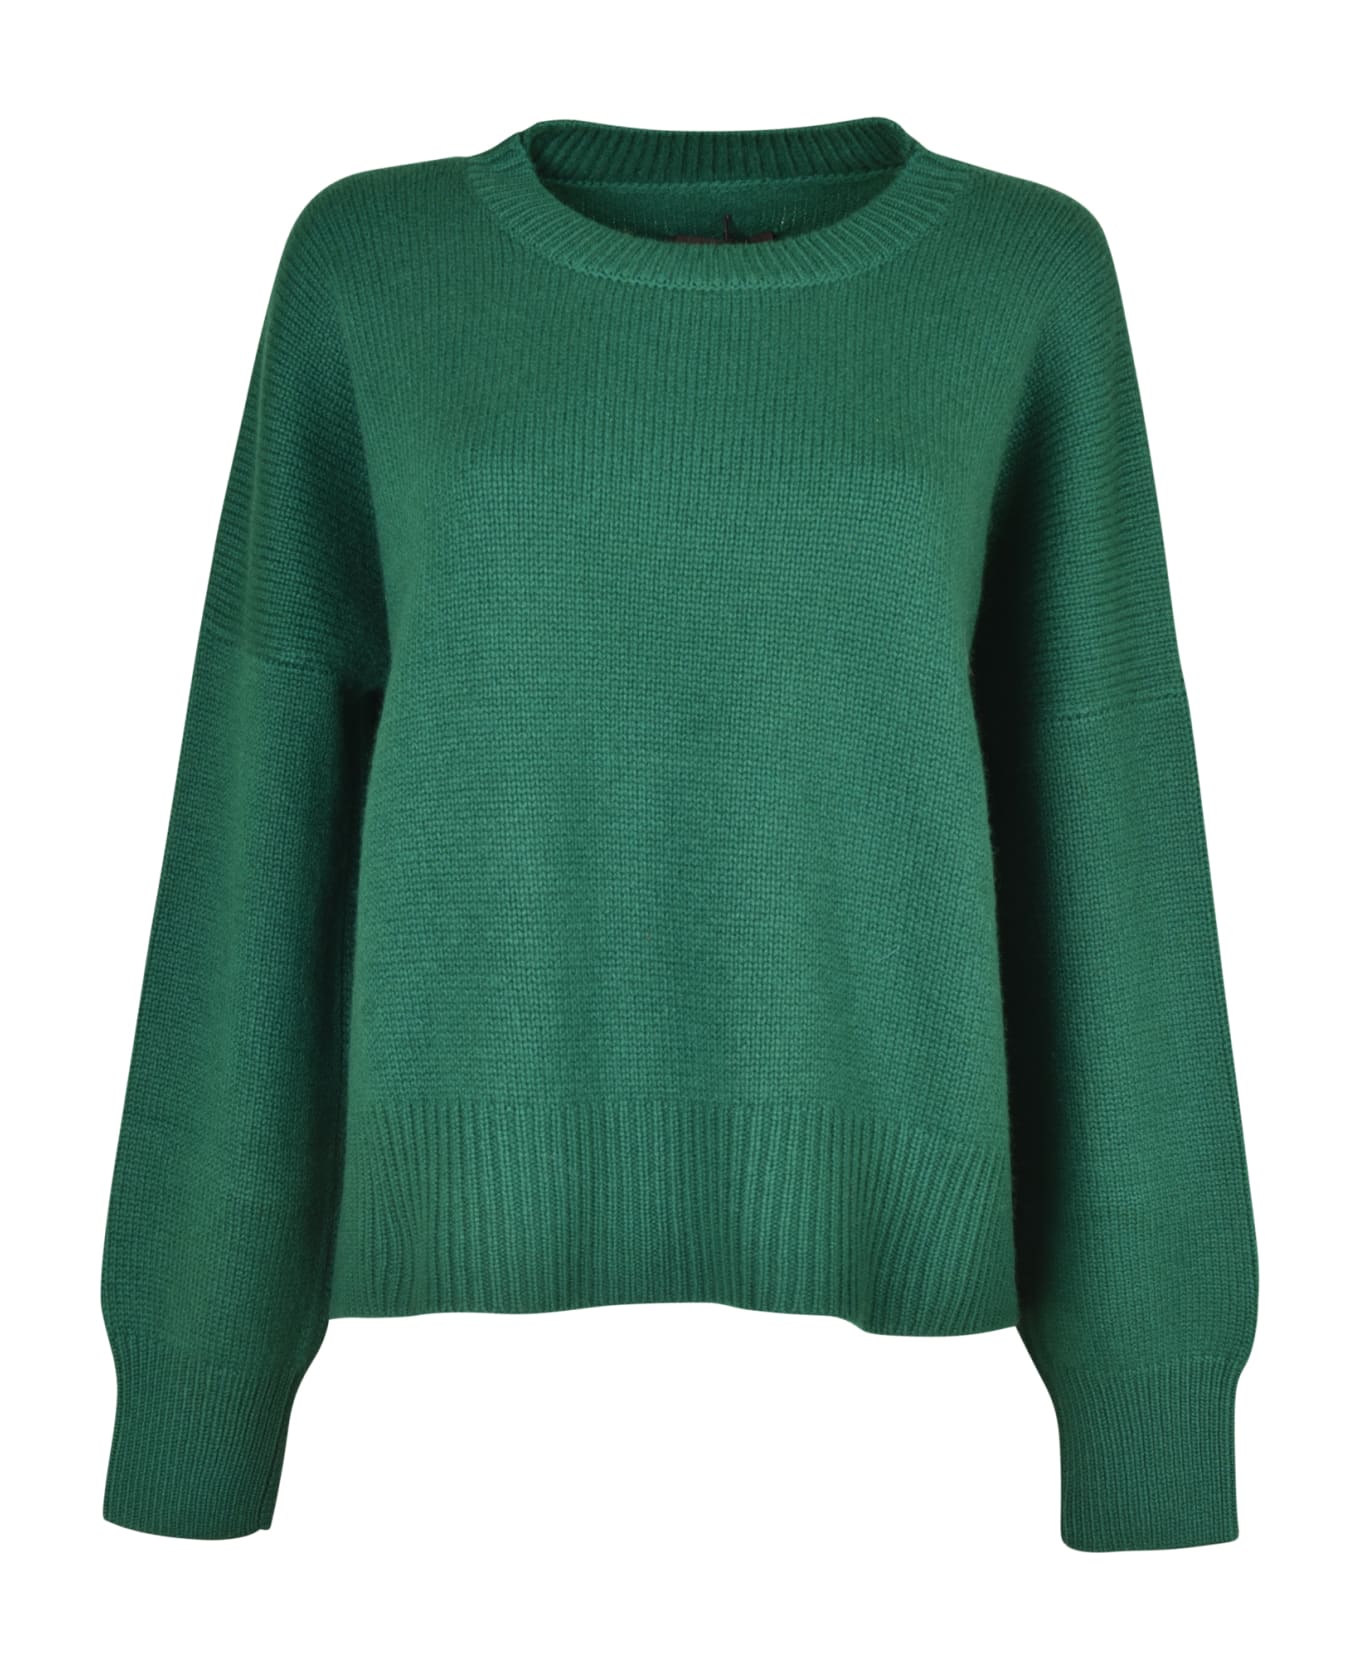 Oyuna Aila Sweater - Emerald